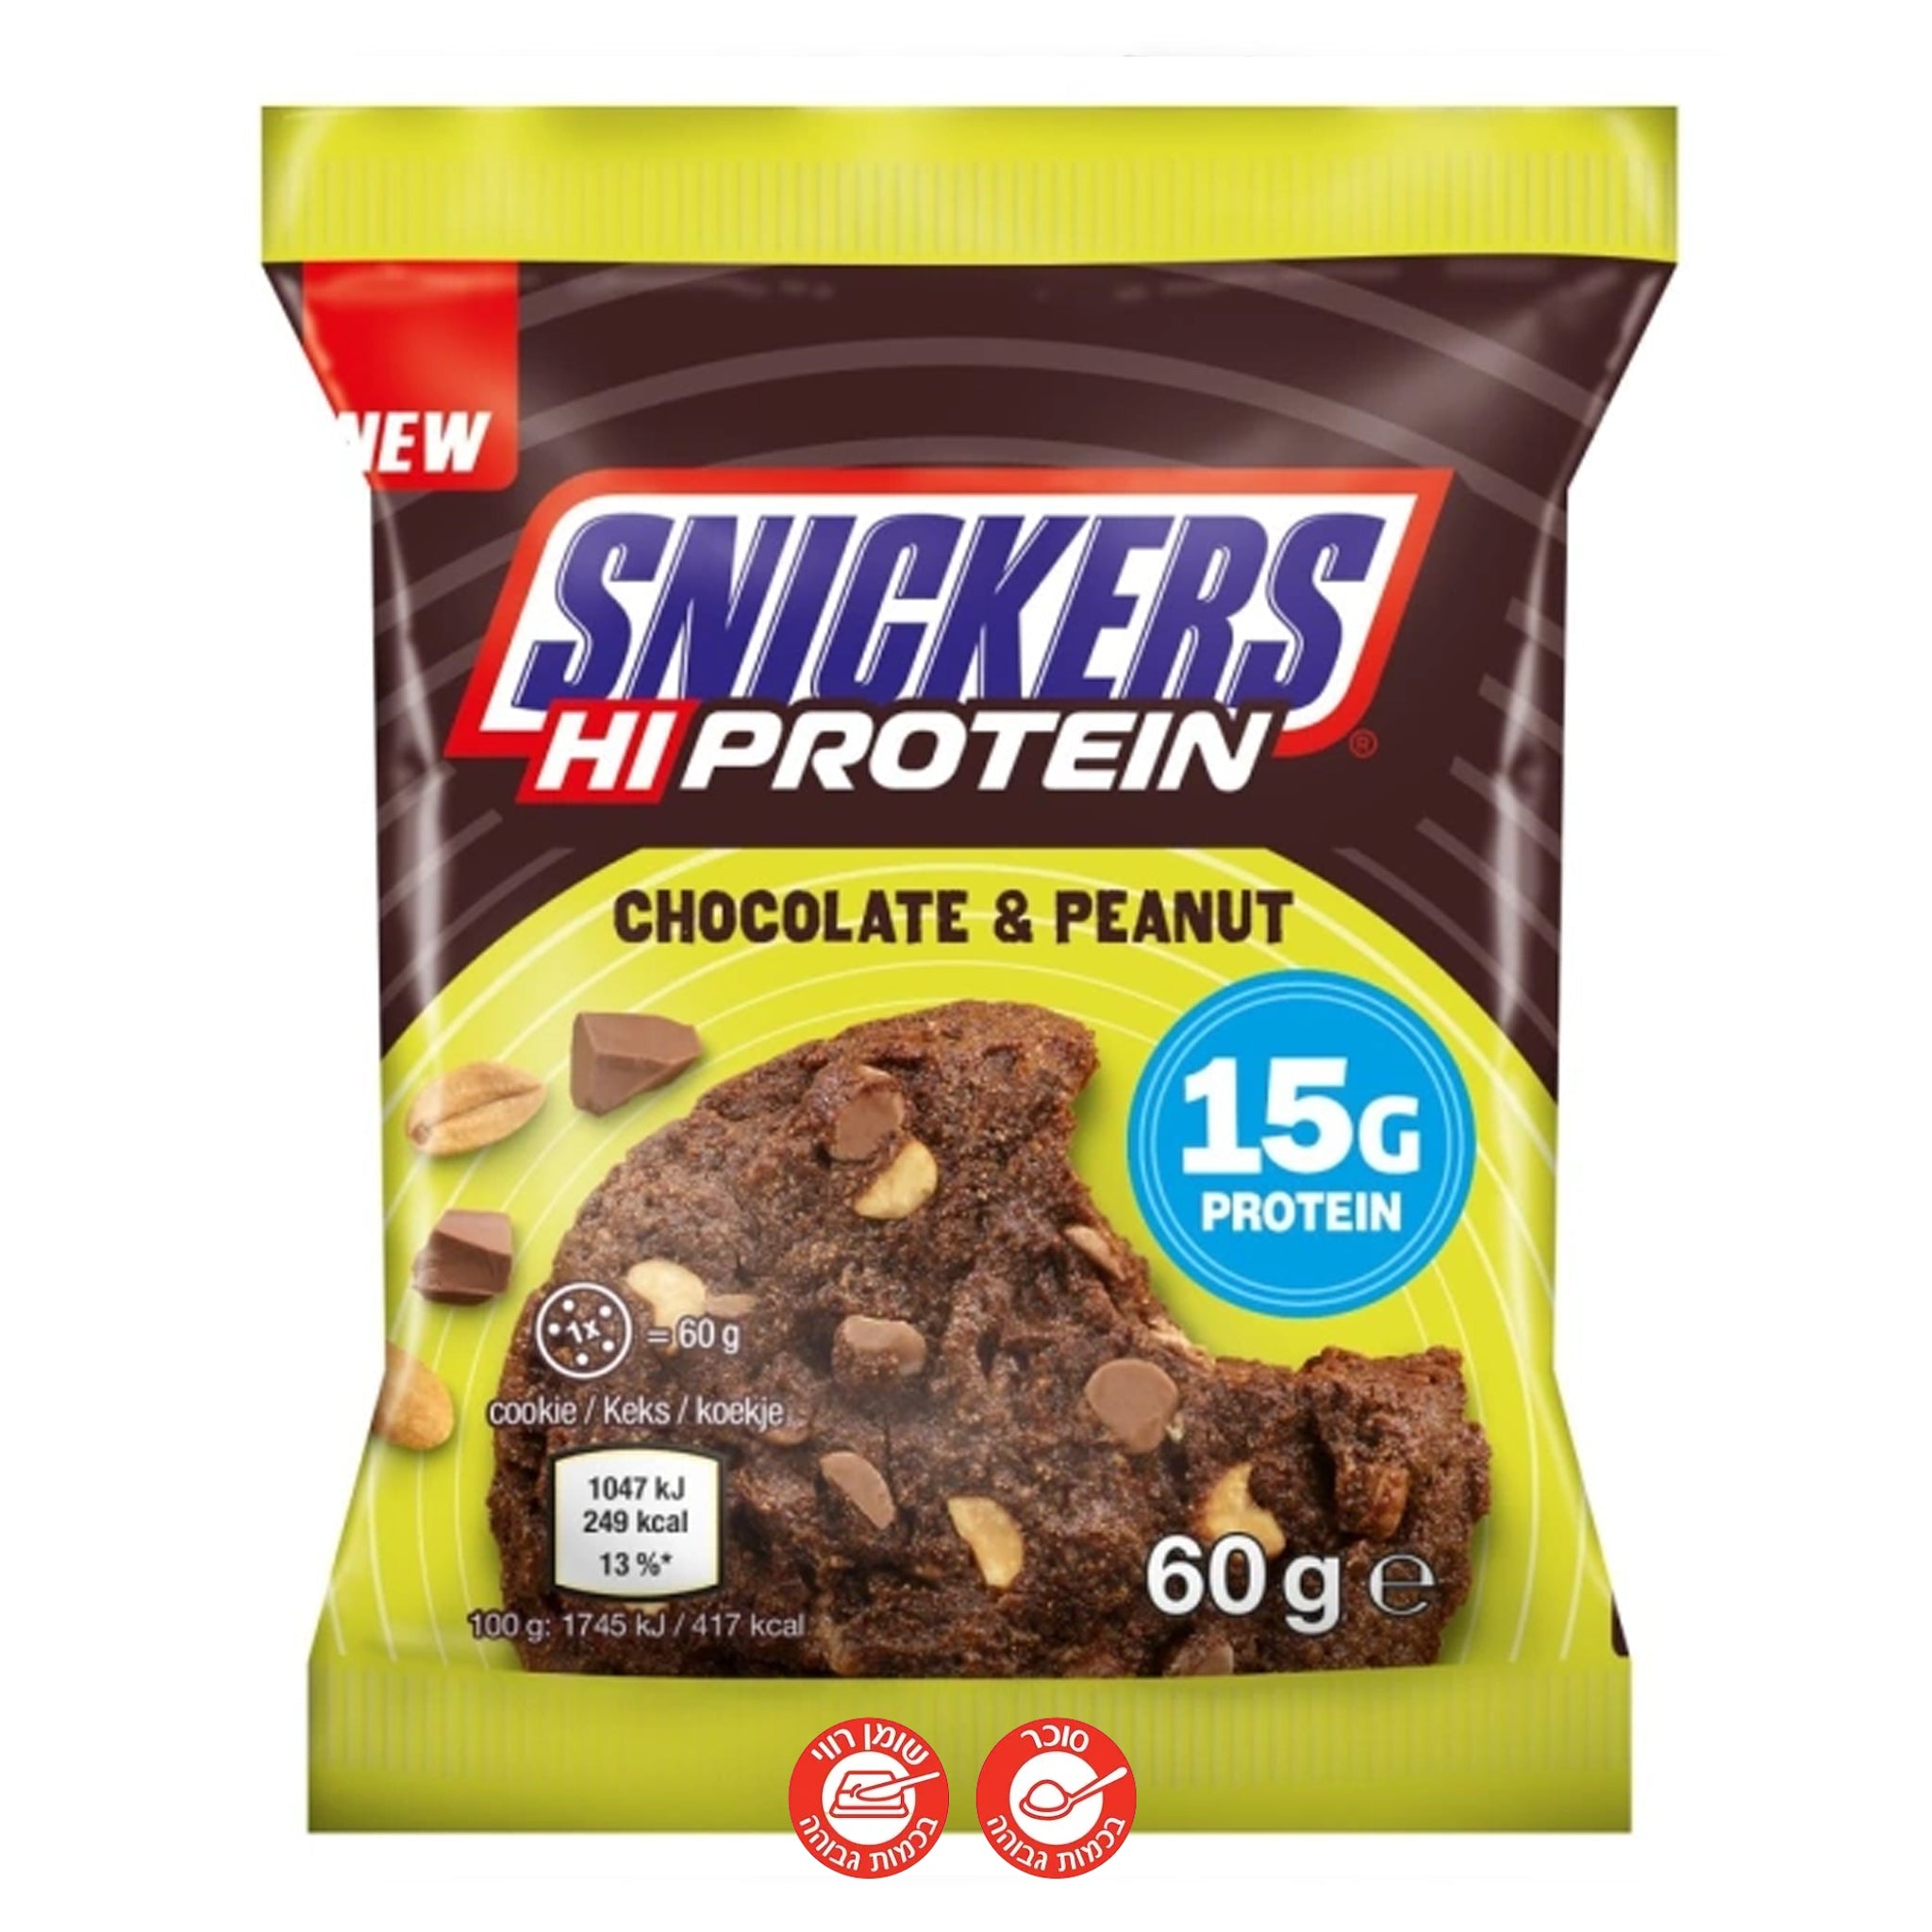 Snickers Chocolate & Peanut Butter Hi Protein עוגית סניקרס פרוטאין עם בוטנים ושוקולד